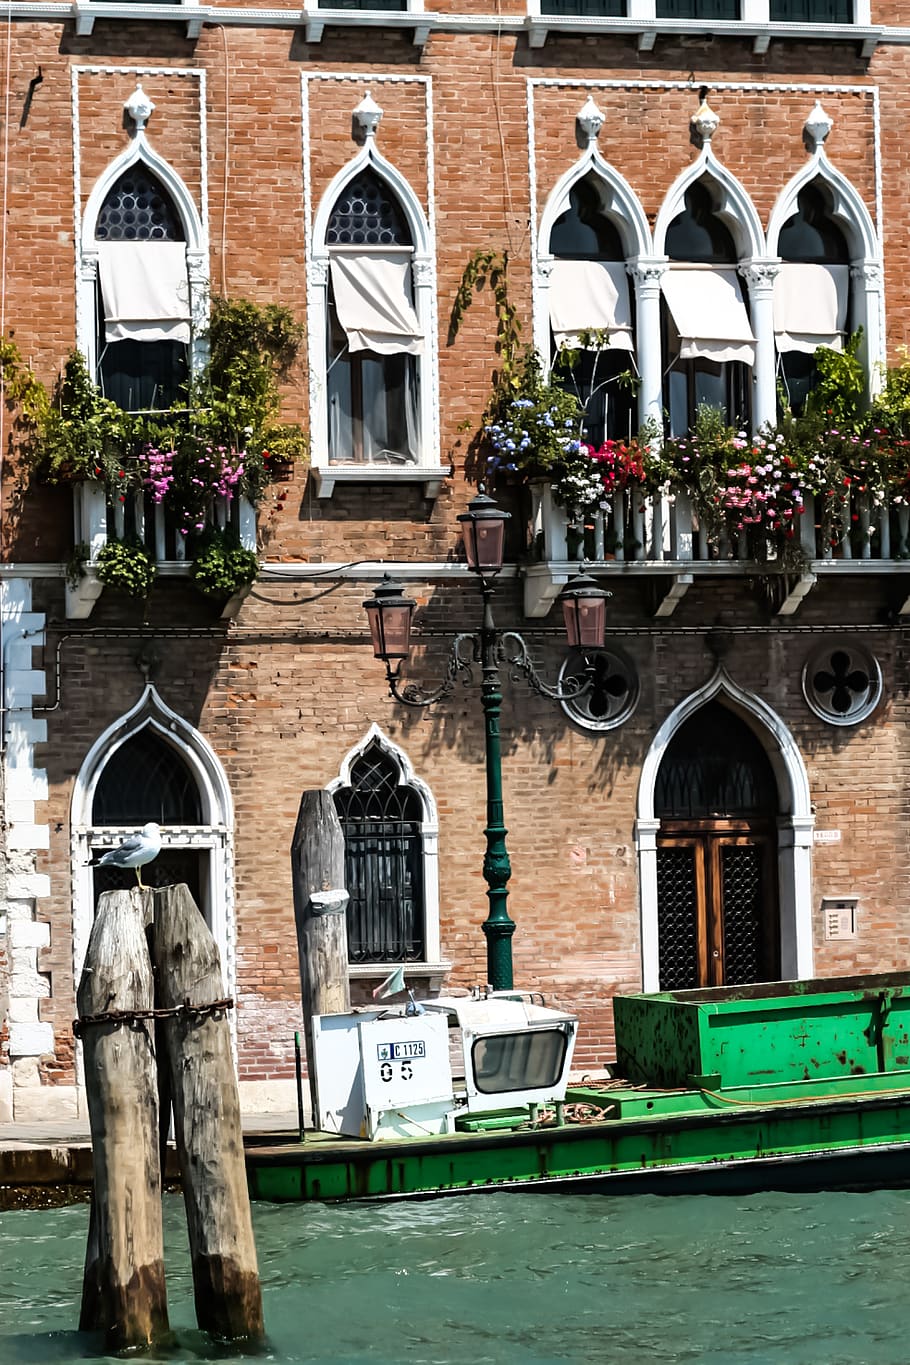 italy, venessia, the gondolier, gondola, romantic, canal, famous, 11-08-18, built structure, building exterior